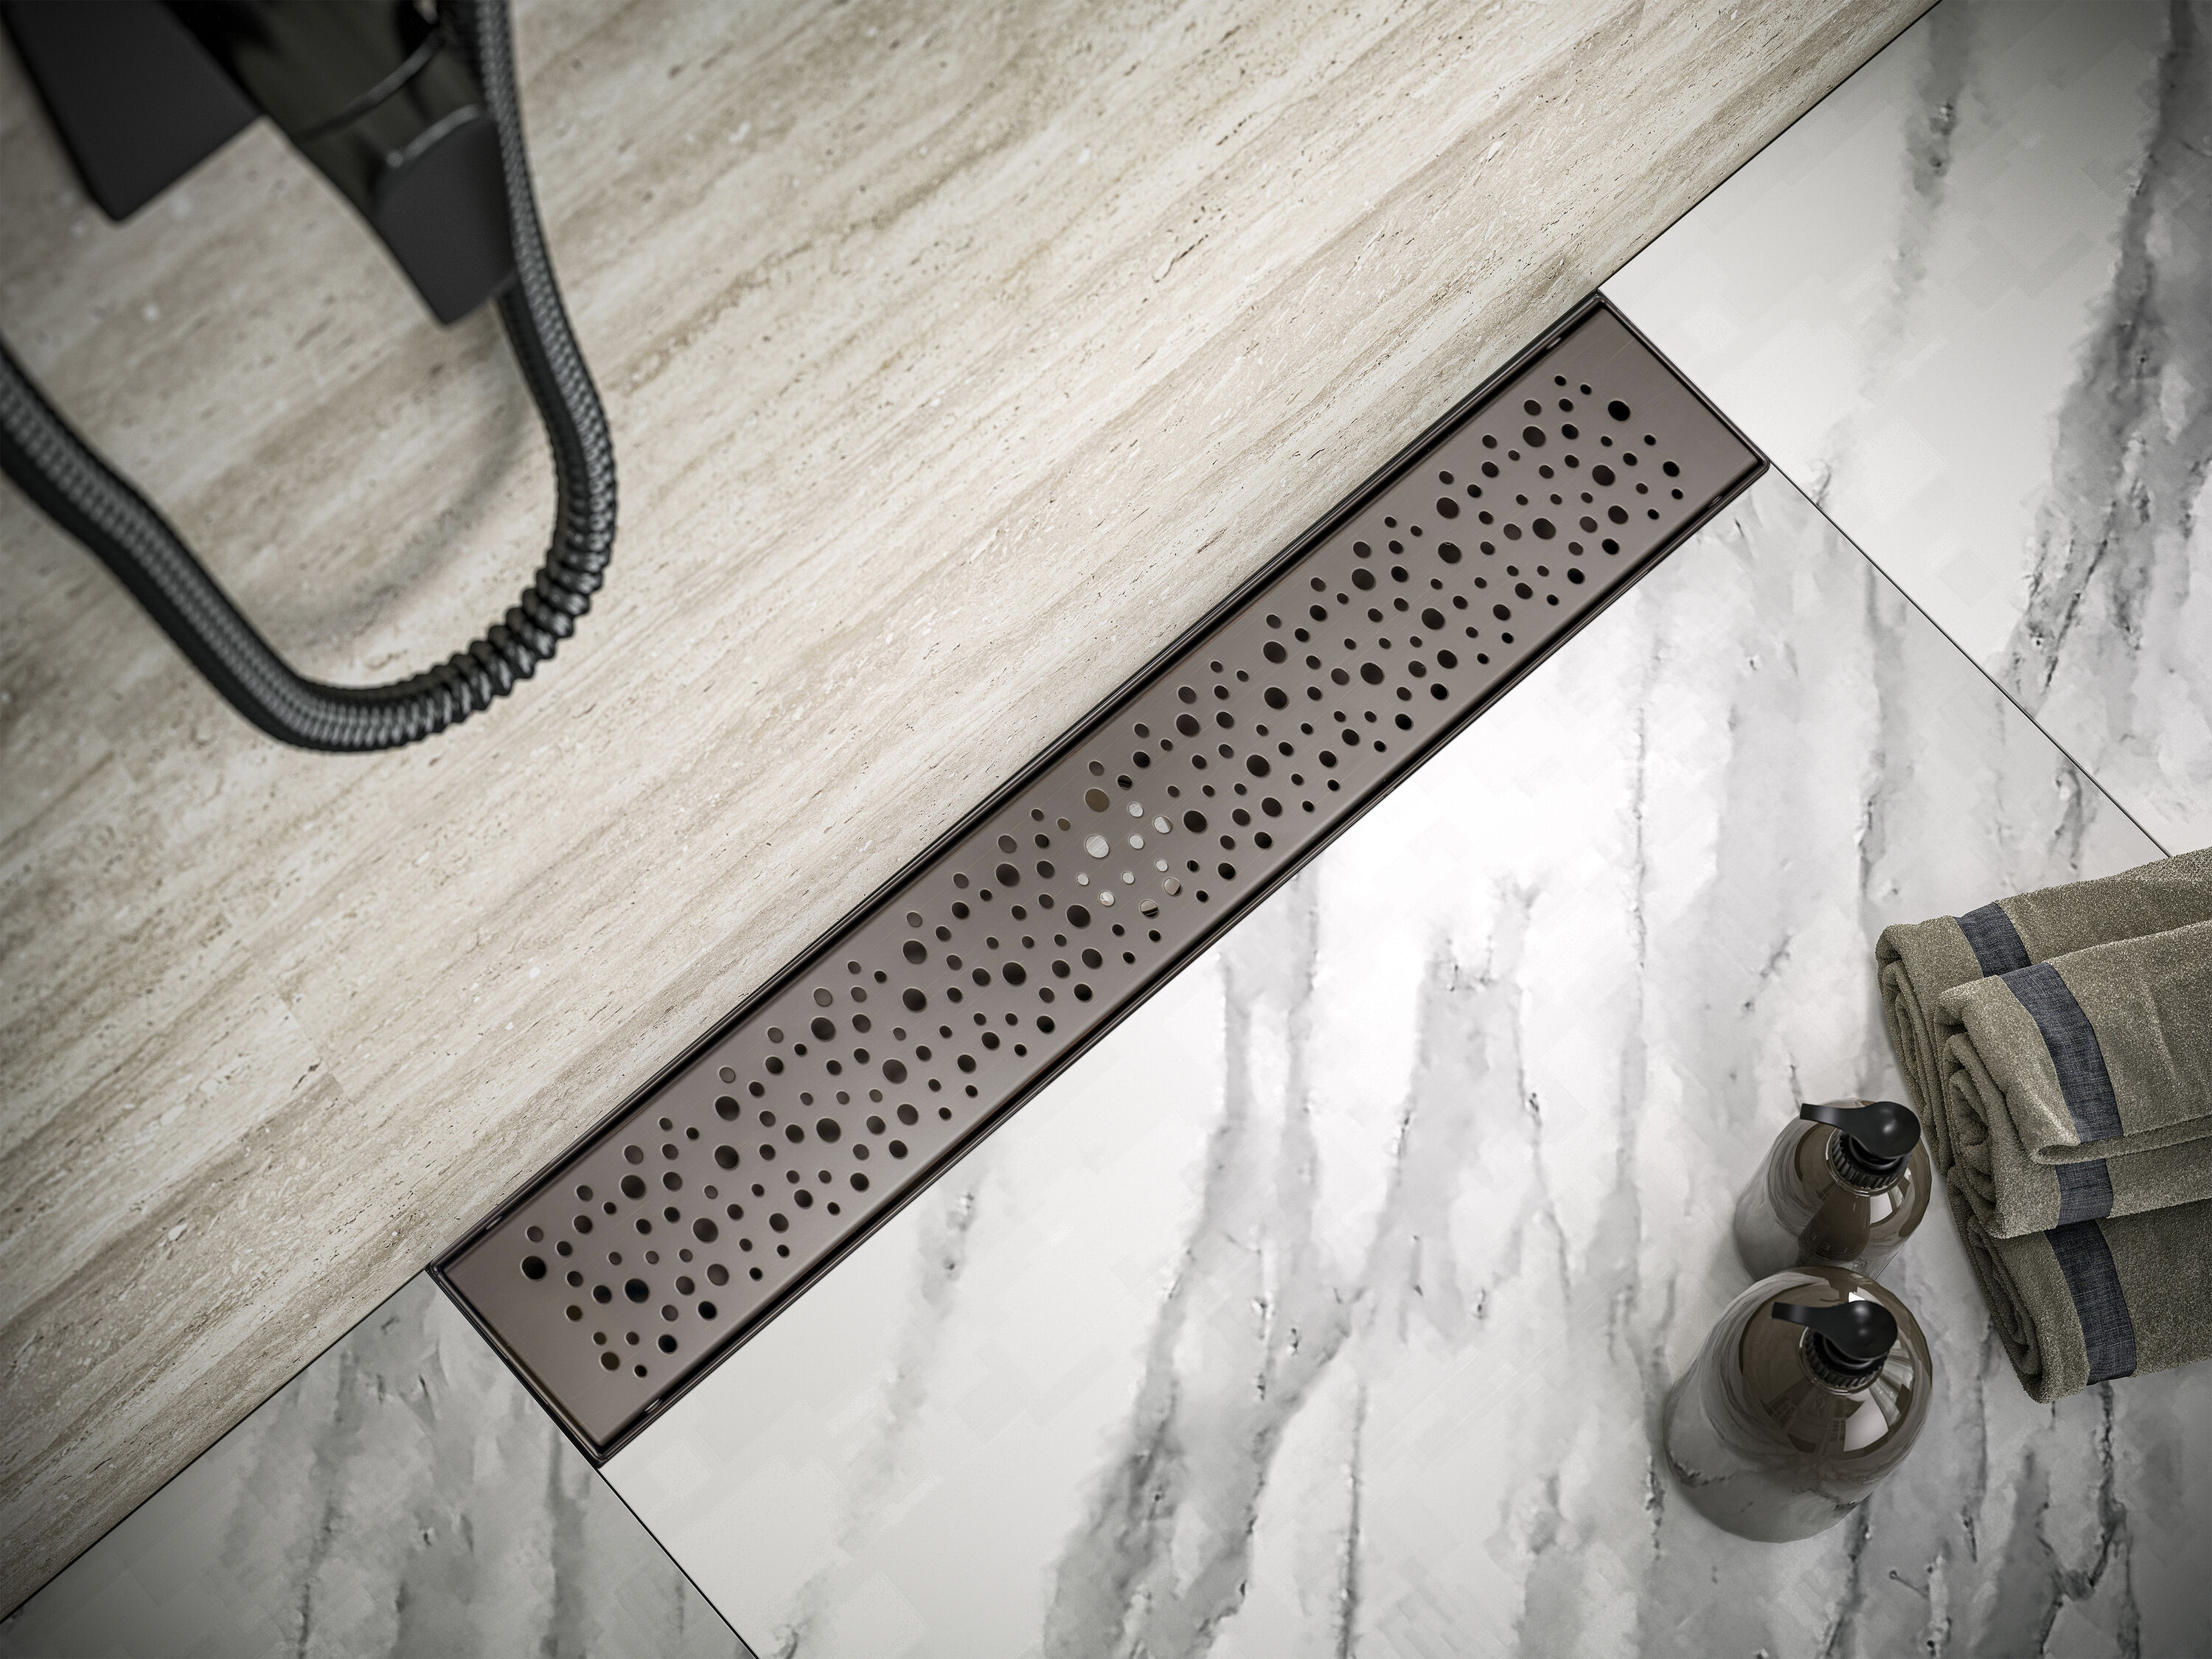 Novalinea - 40 Inch Linear Shower Drain with Tile Insert Grate